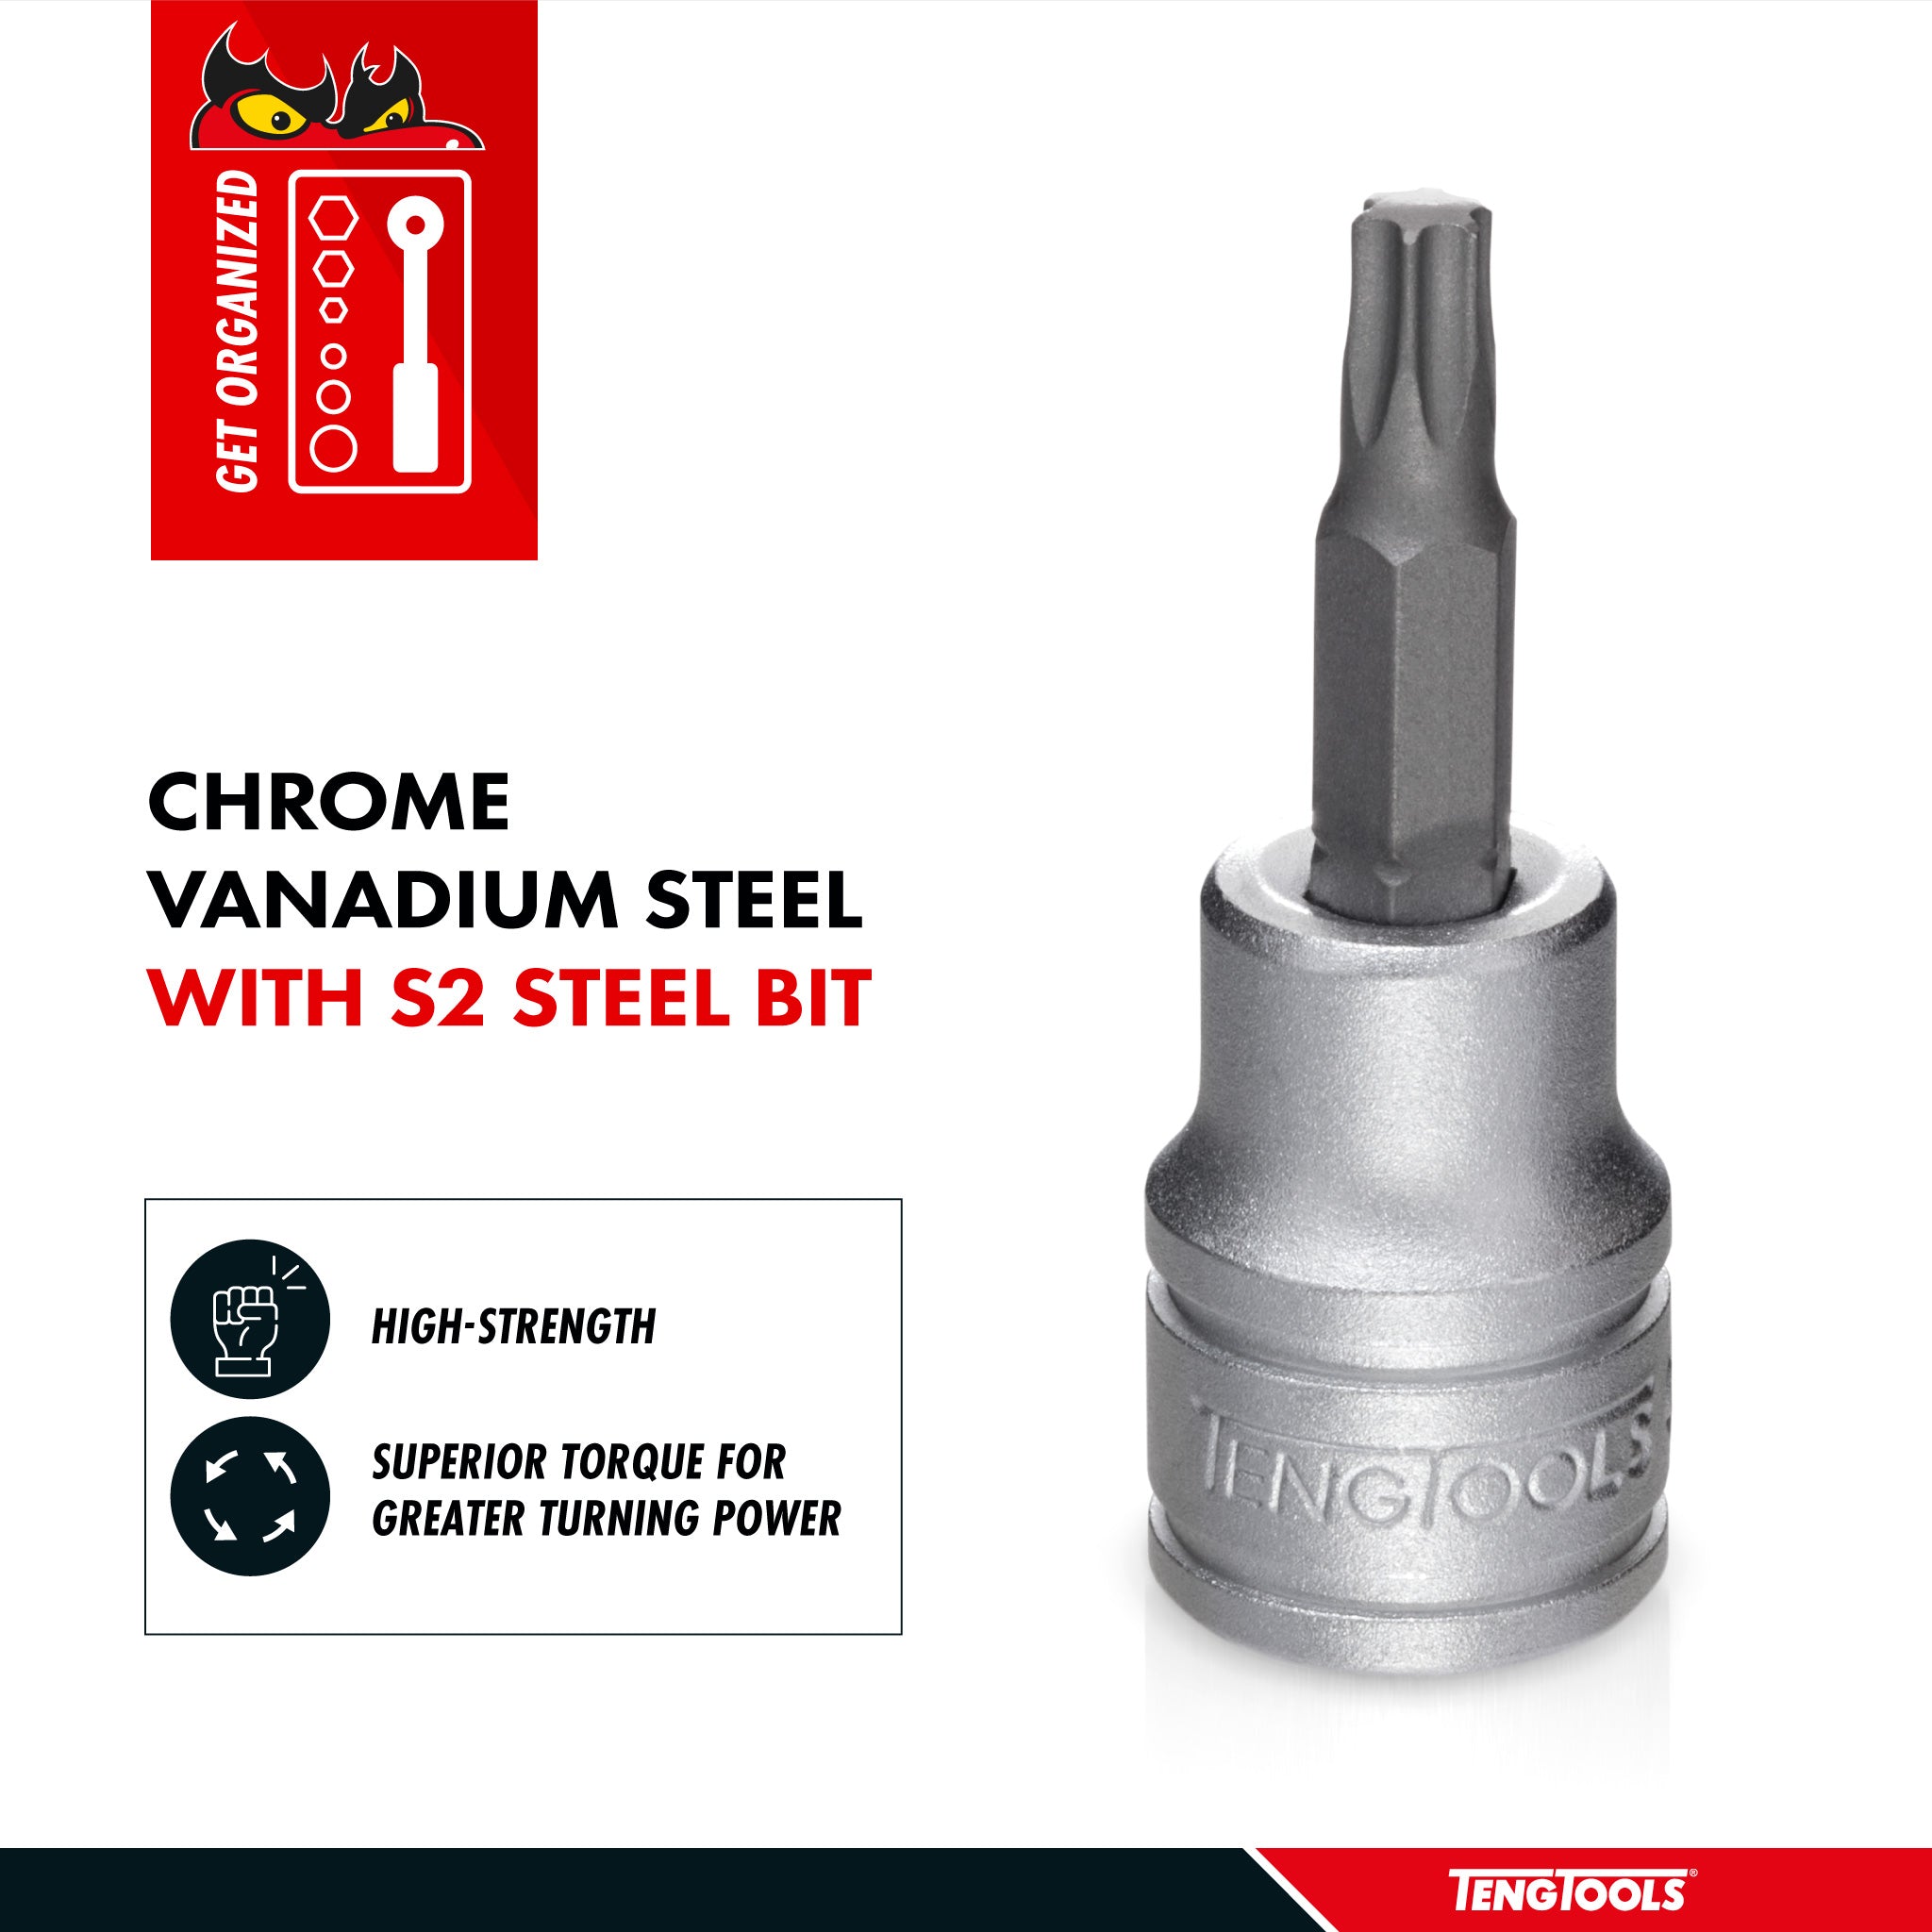 Teng Tools 1/4 Inch Drive Metric Torx TX Chrome Vanadium Sockets - TX30